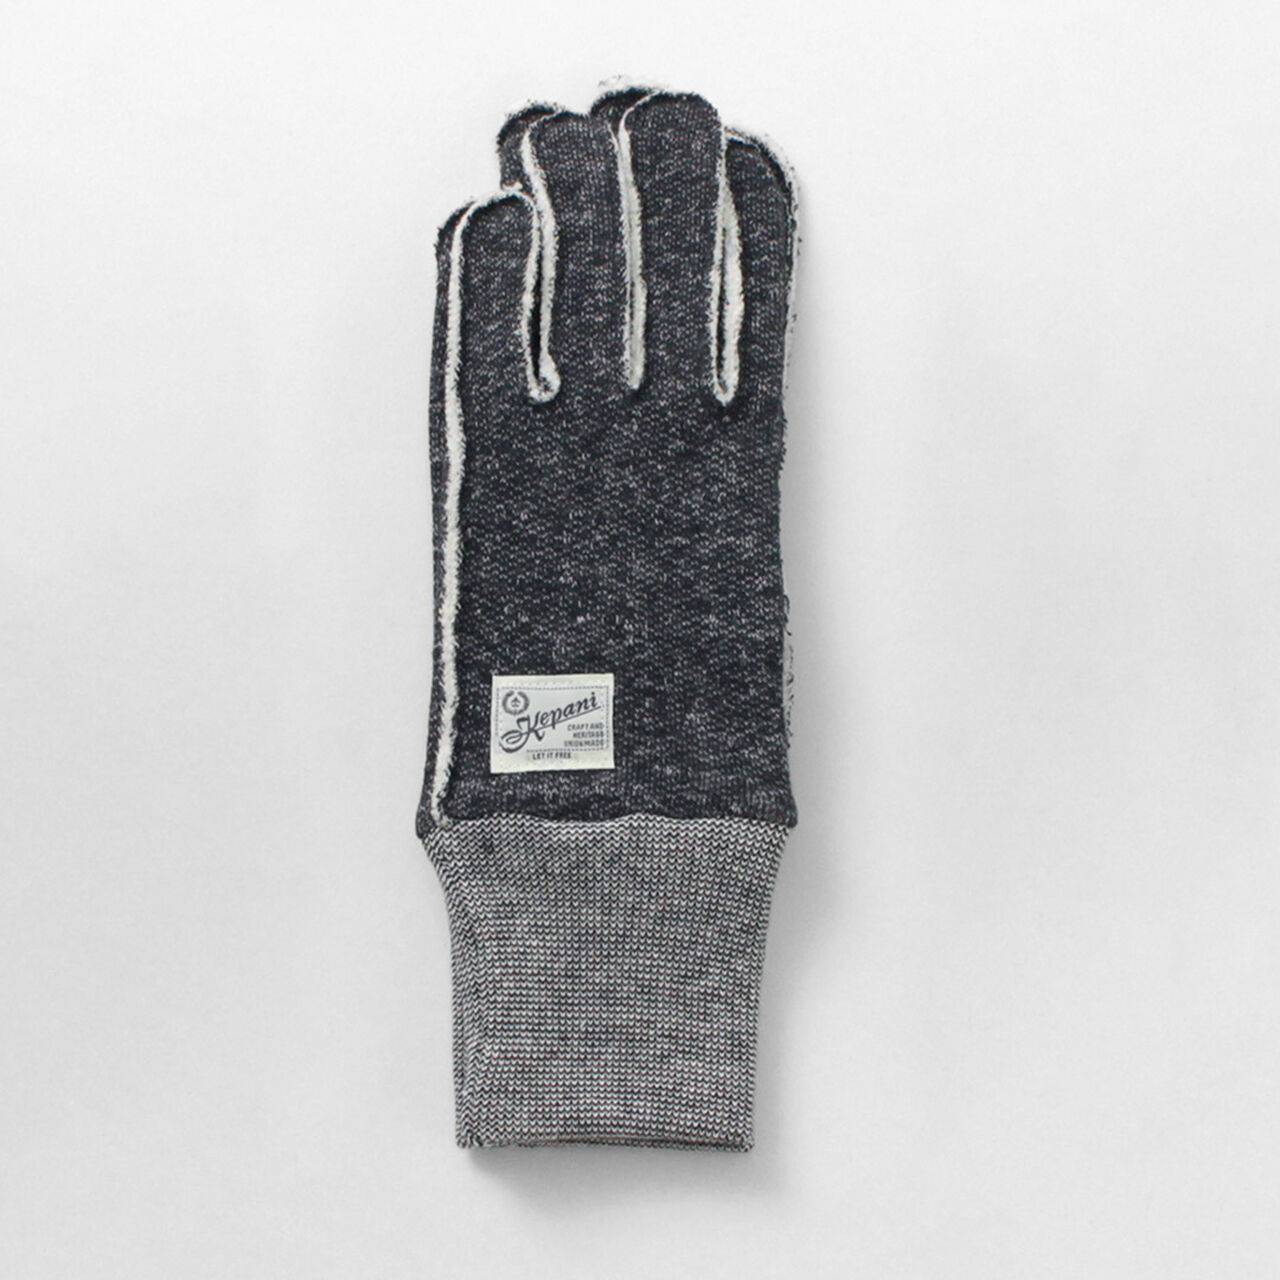 Raffy brushed-lining Sweat Gloves,Black, large image number 0